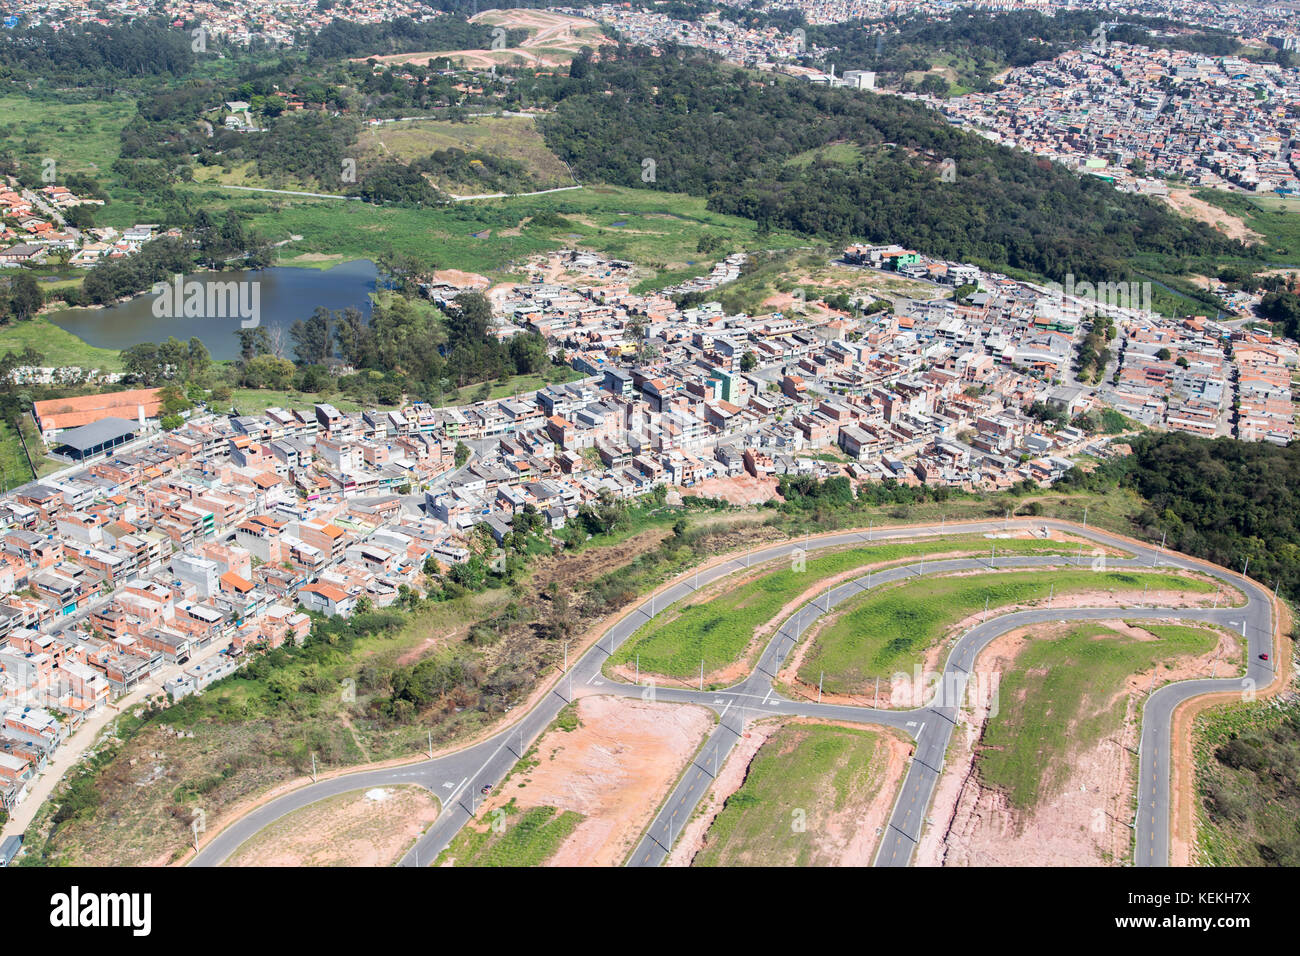 aerial view of sao paulo metropolitan region - brazil Stock Photo